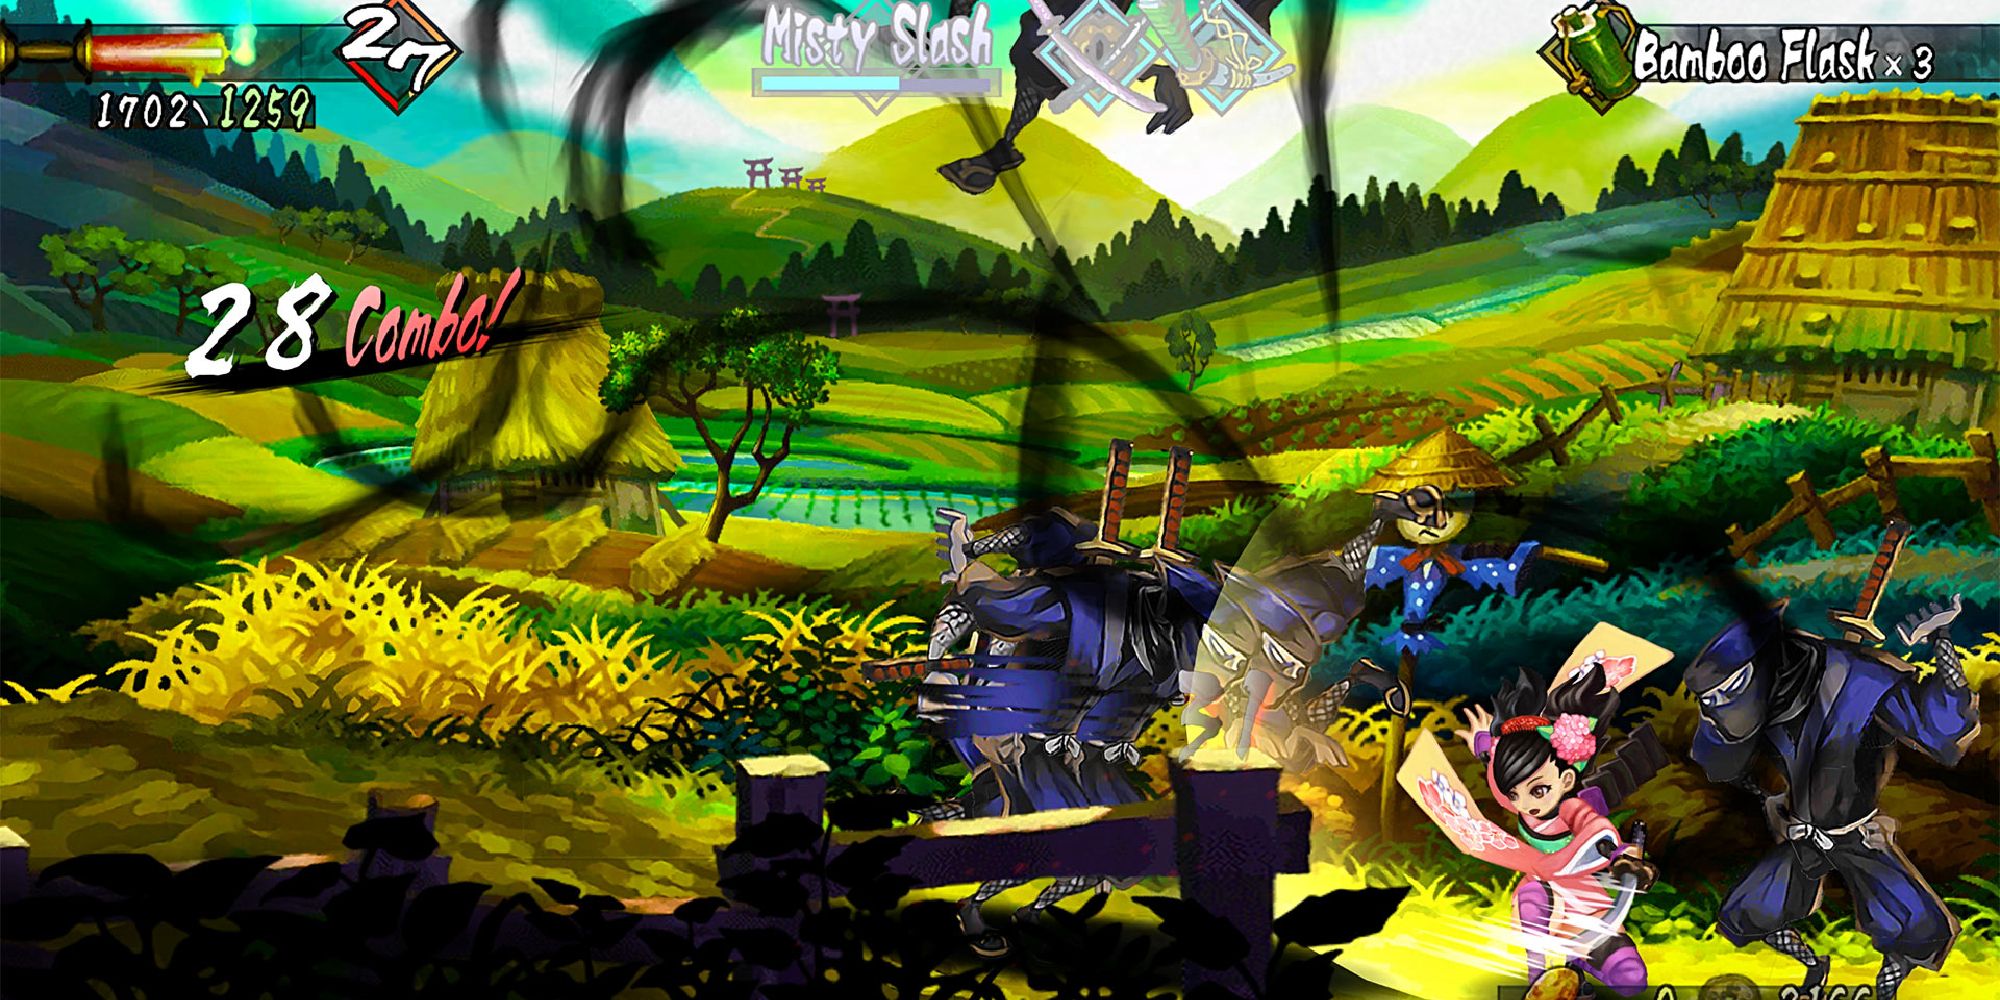 A screenshot of Muramasa: The Demon Blade, showing Momohime slashing through scarecrows in a verdant field